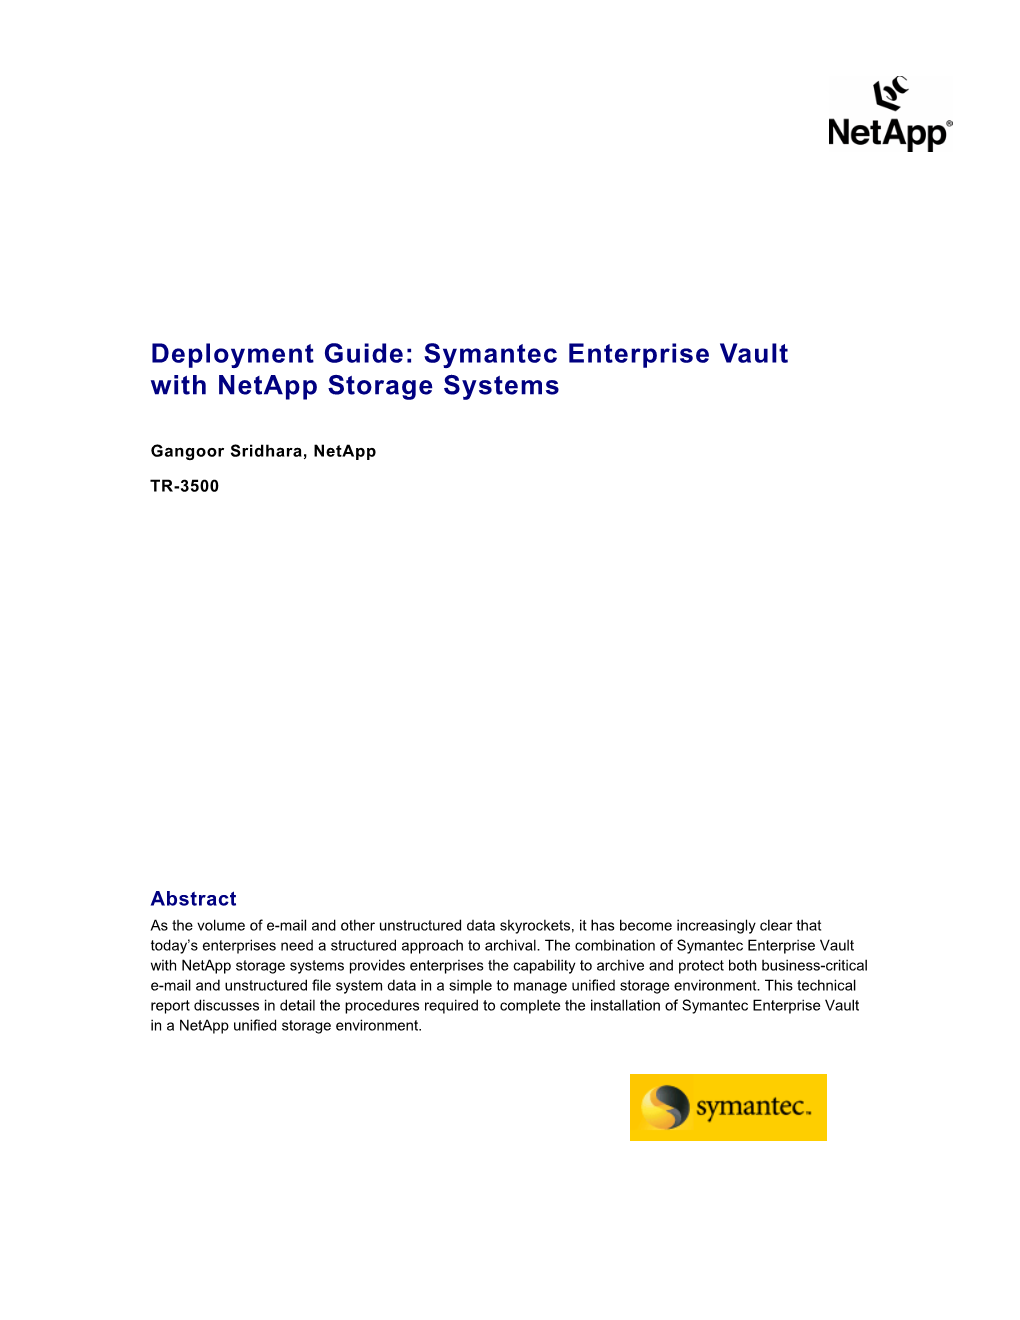 Symantec Enterprise Vault with Netapp Storage Systems